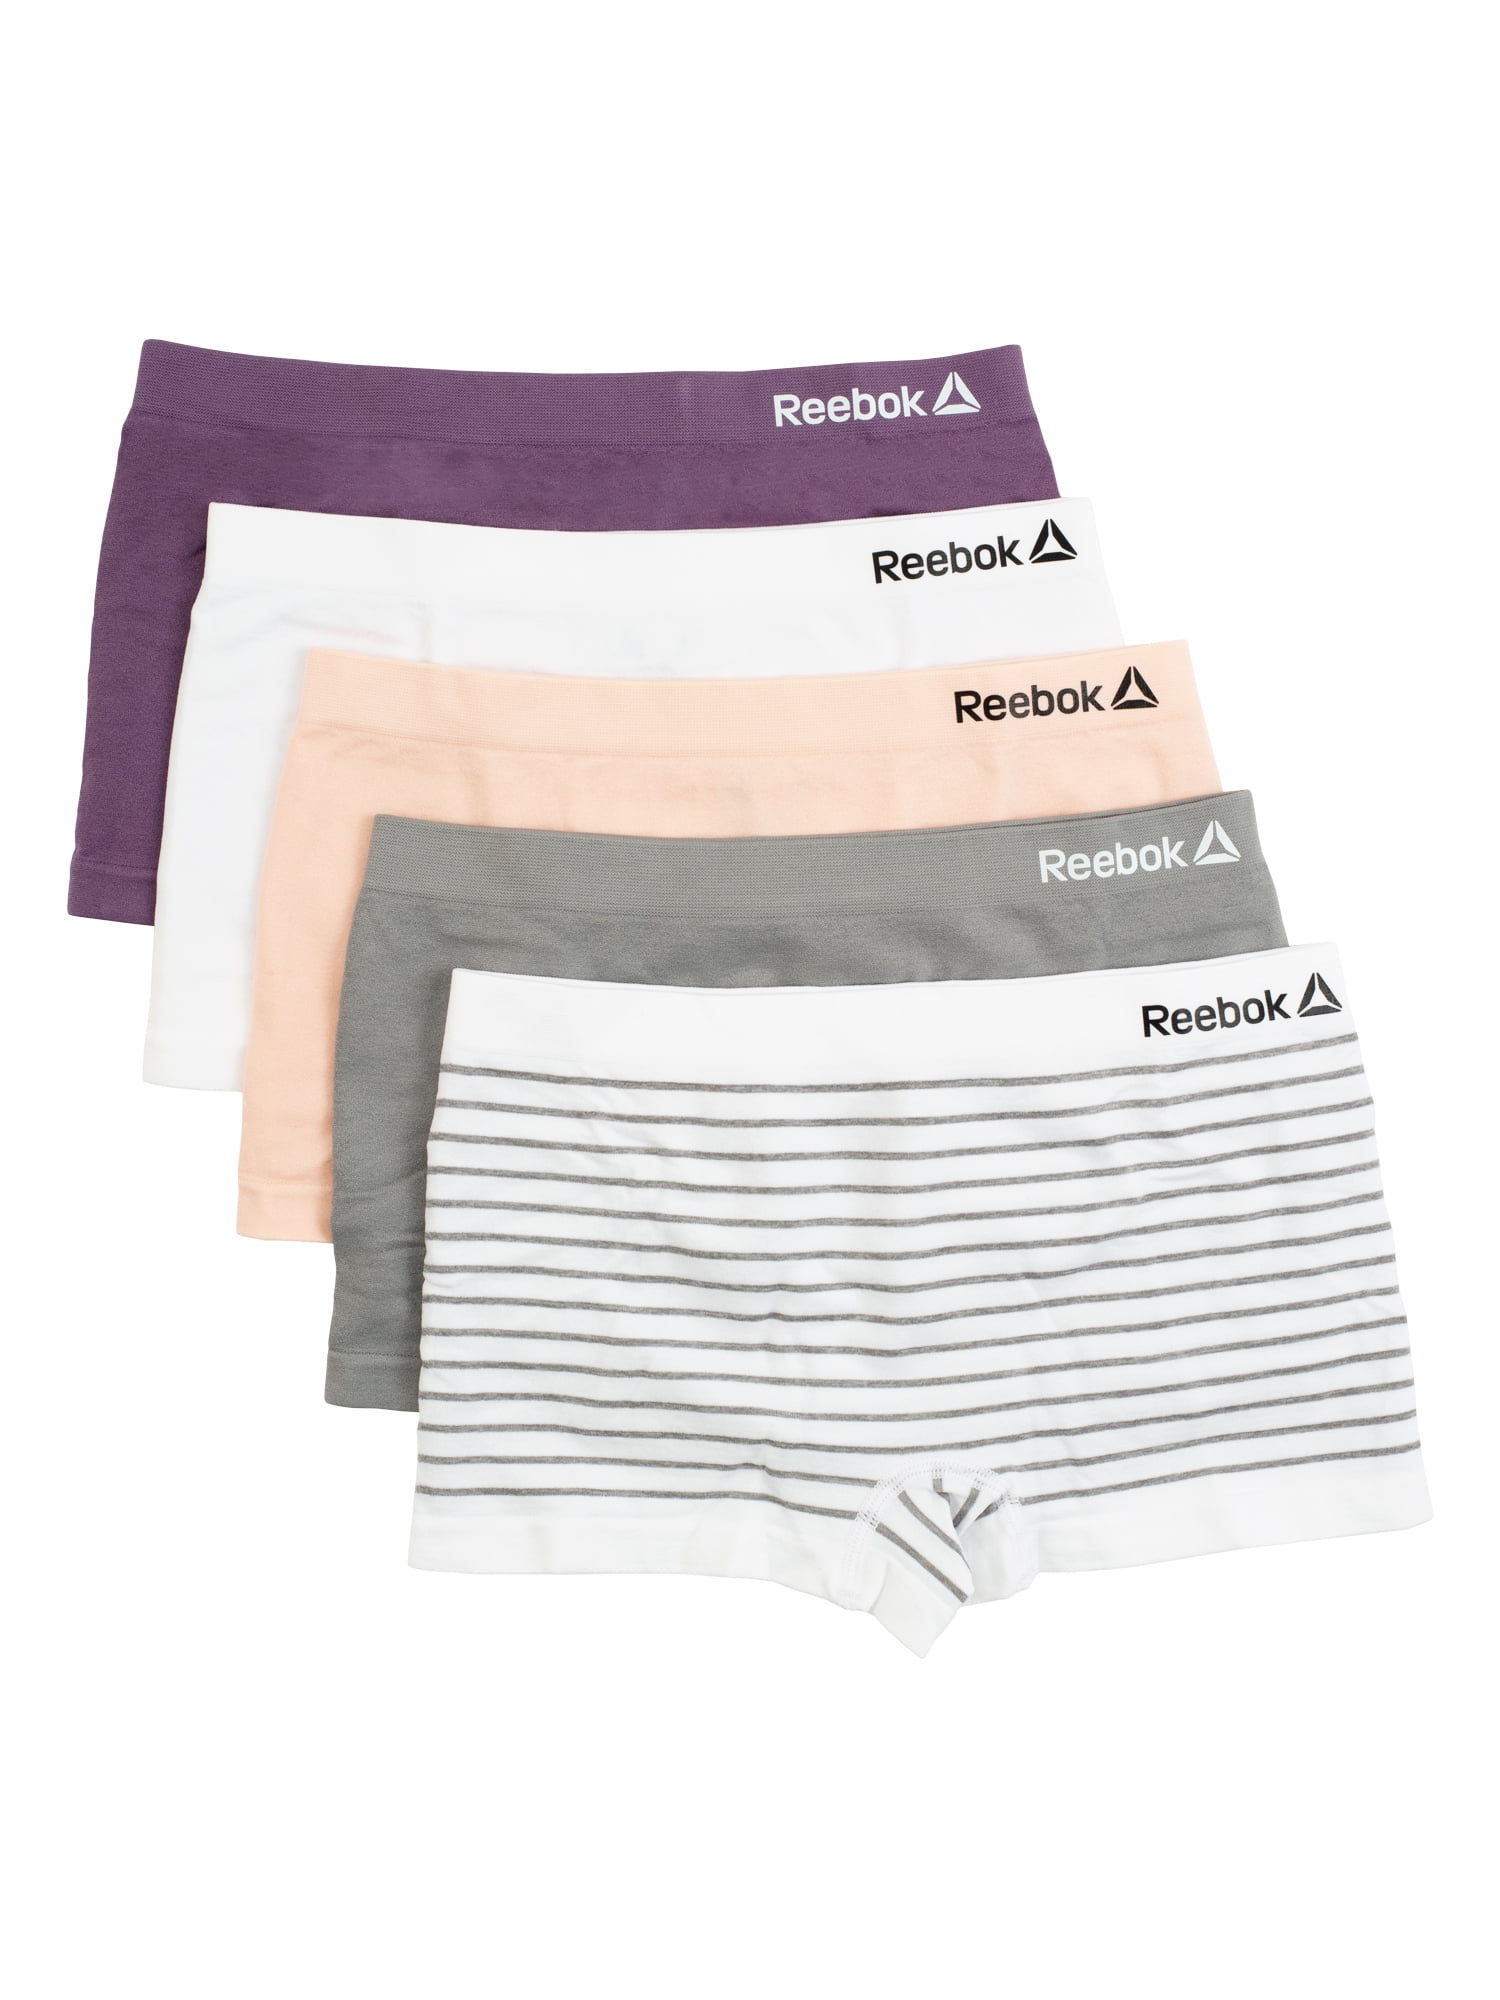 Reebok Girls Seamless Boyshort Panties Underwear, 5-Pack, Sizes S-XL -  